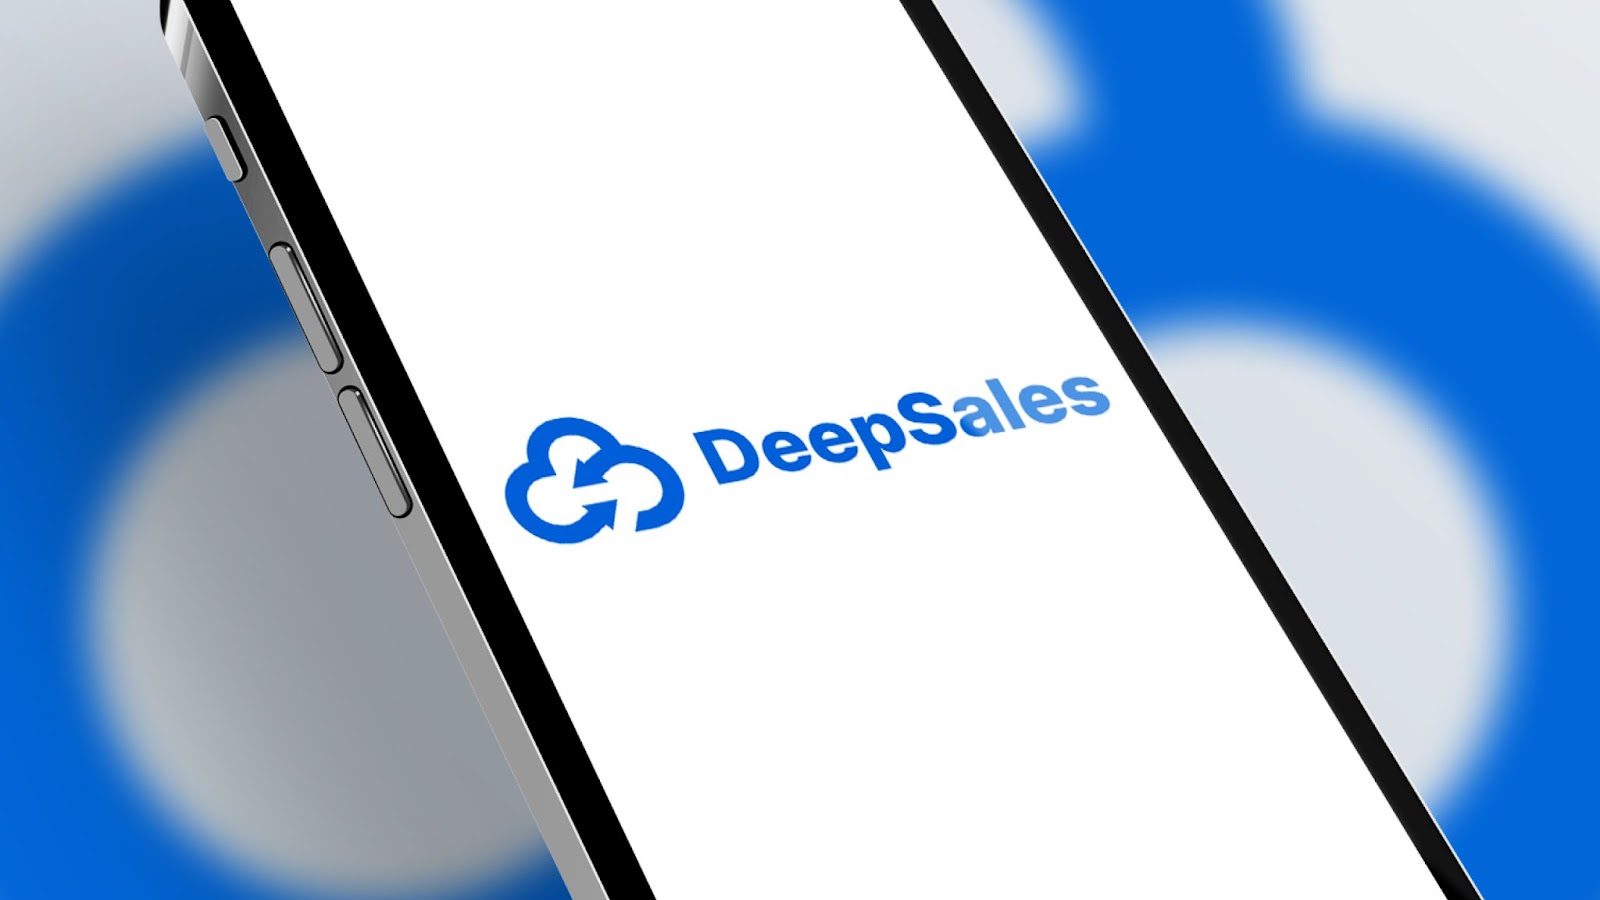 DeepSales Raises $2 Million USD in Pre-A Investment Round